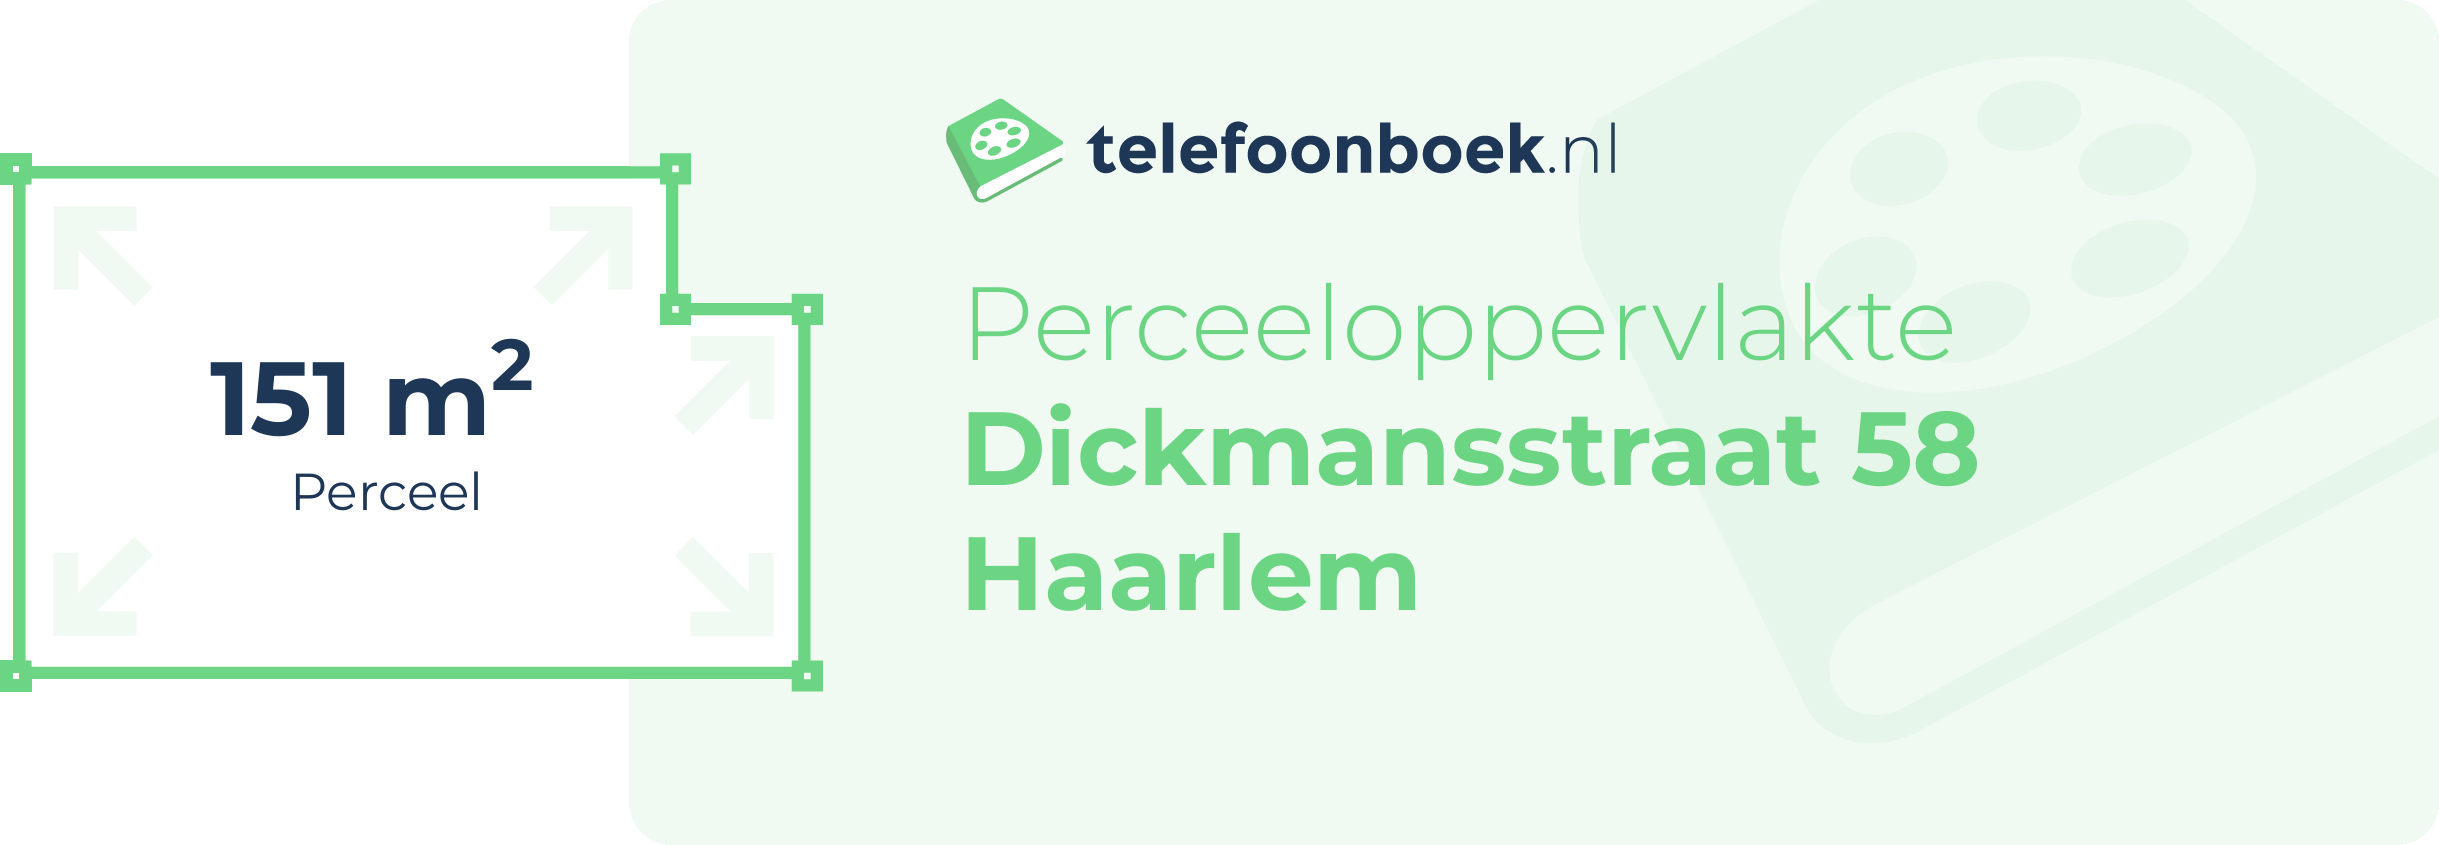 Perceeloppervlakte Dickmansstraat 58 Haarlem